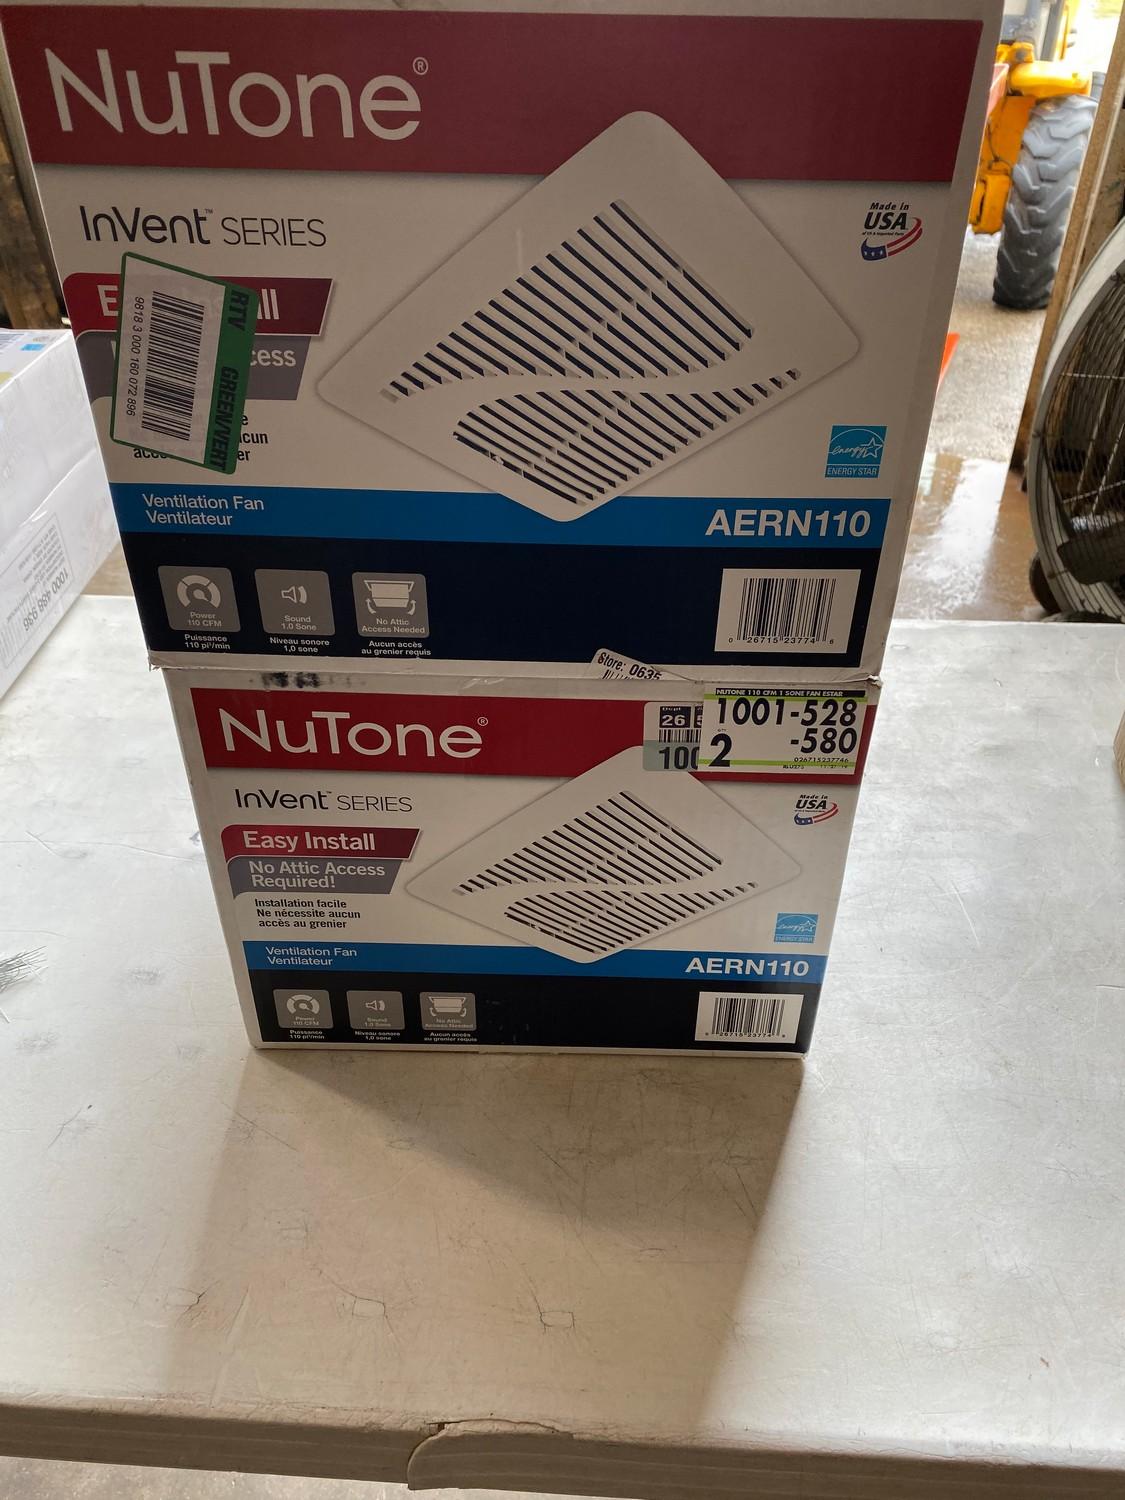 2- Nutone Invent Series Ventilation fan